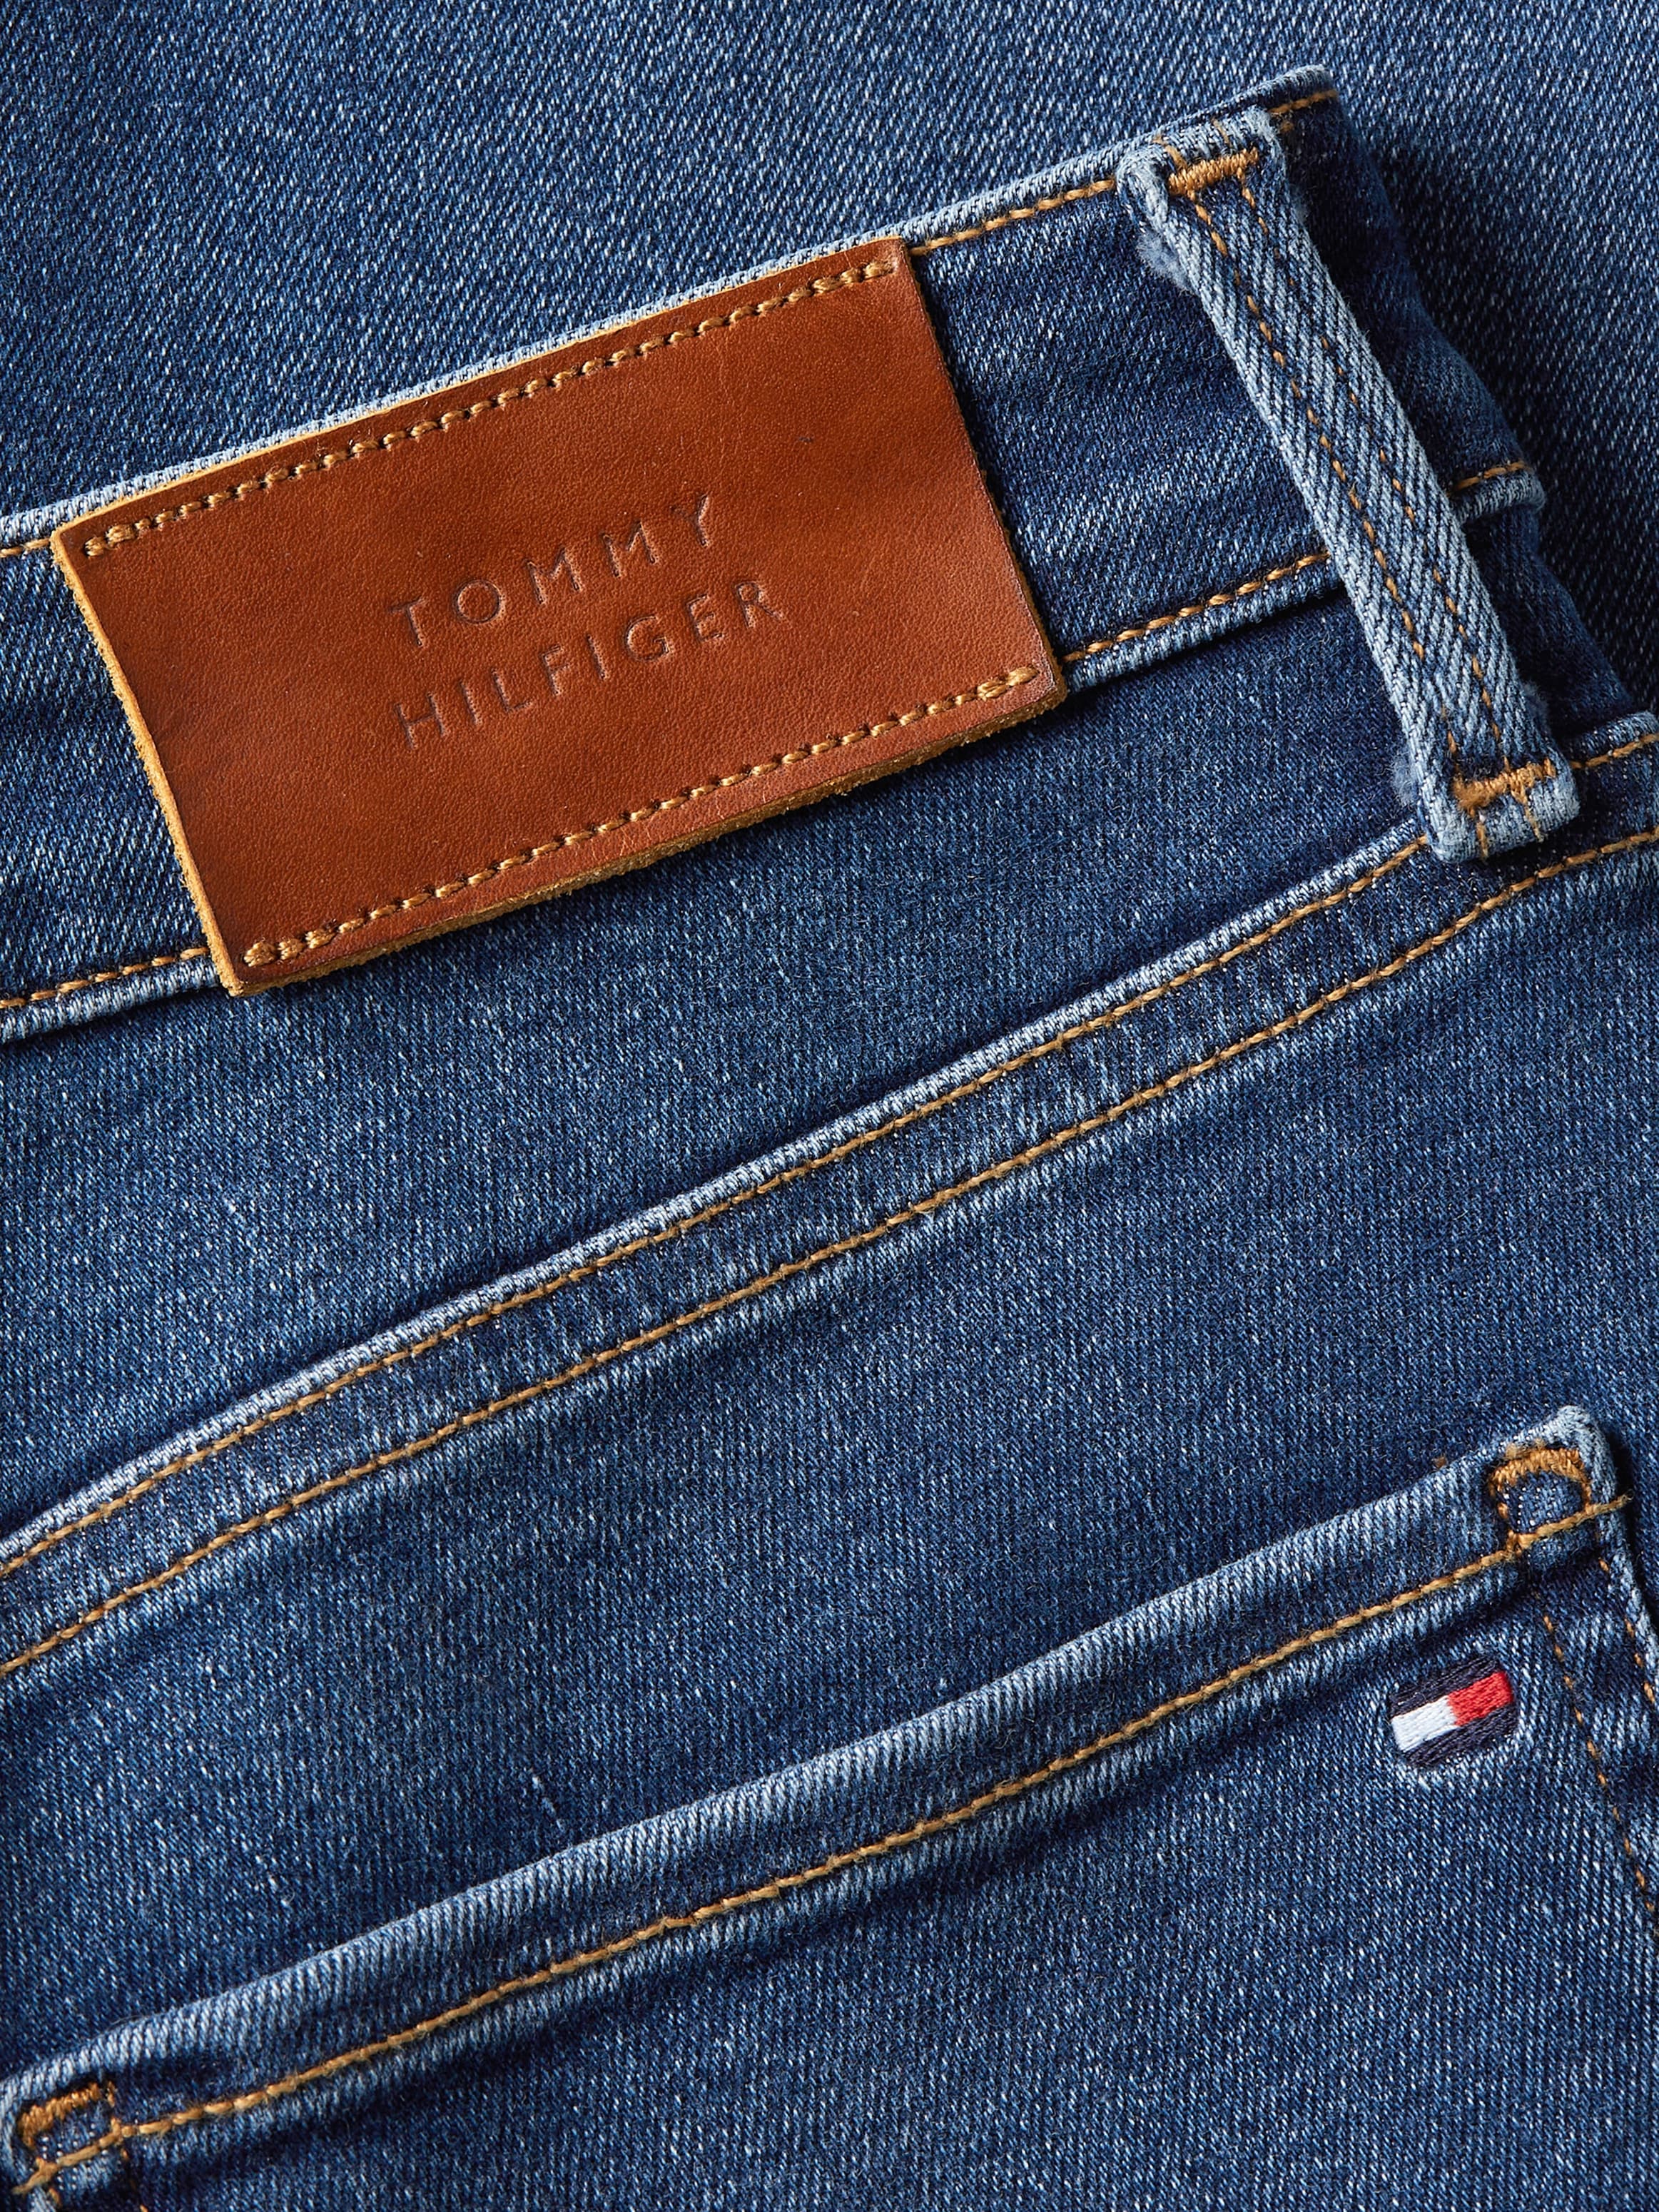 OTTO Hilfiger Logo-Badge mit HARLEM Skinny-fit-Jeans bei Hilfiger FLEX Tommy U HW«, Tommy SKINNY kaufen »TH